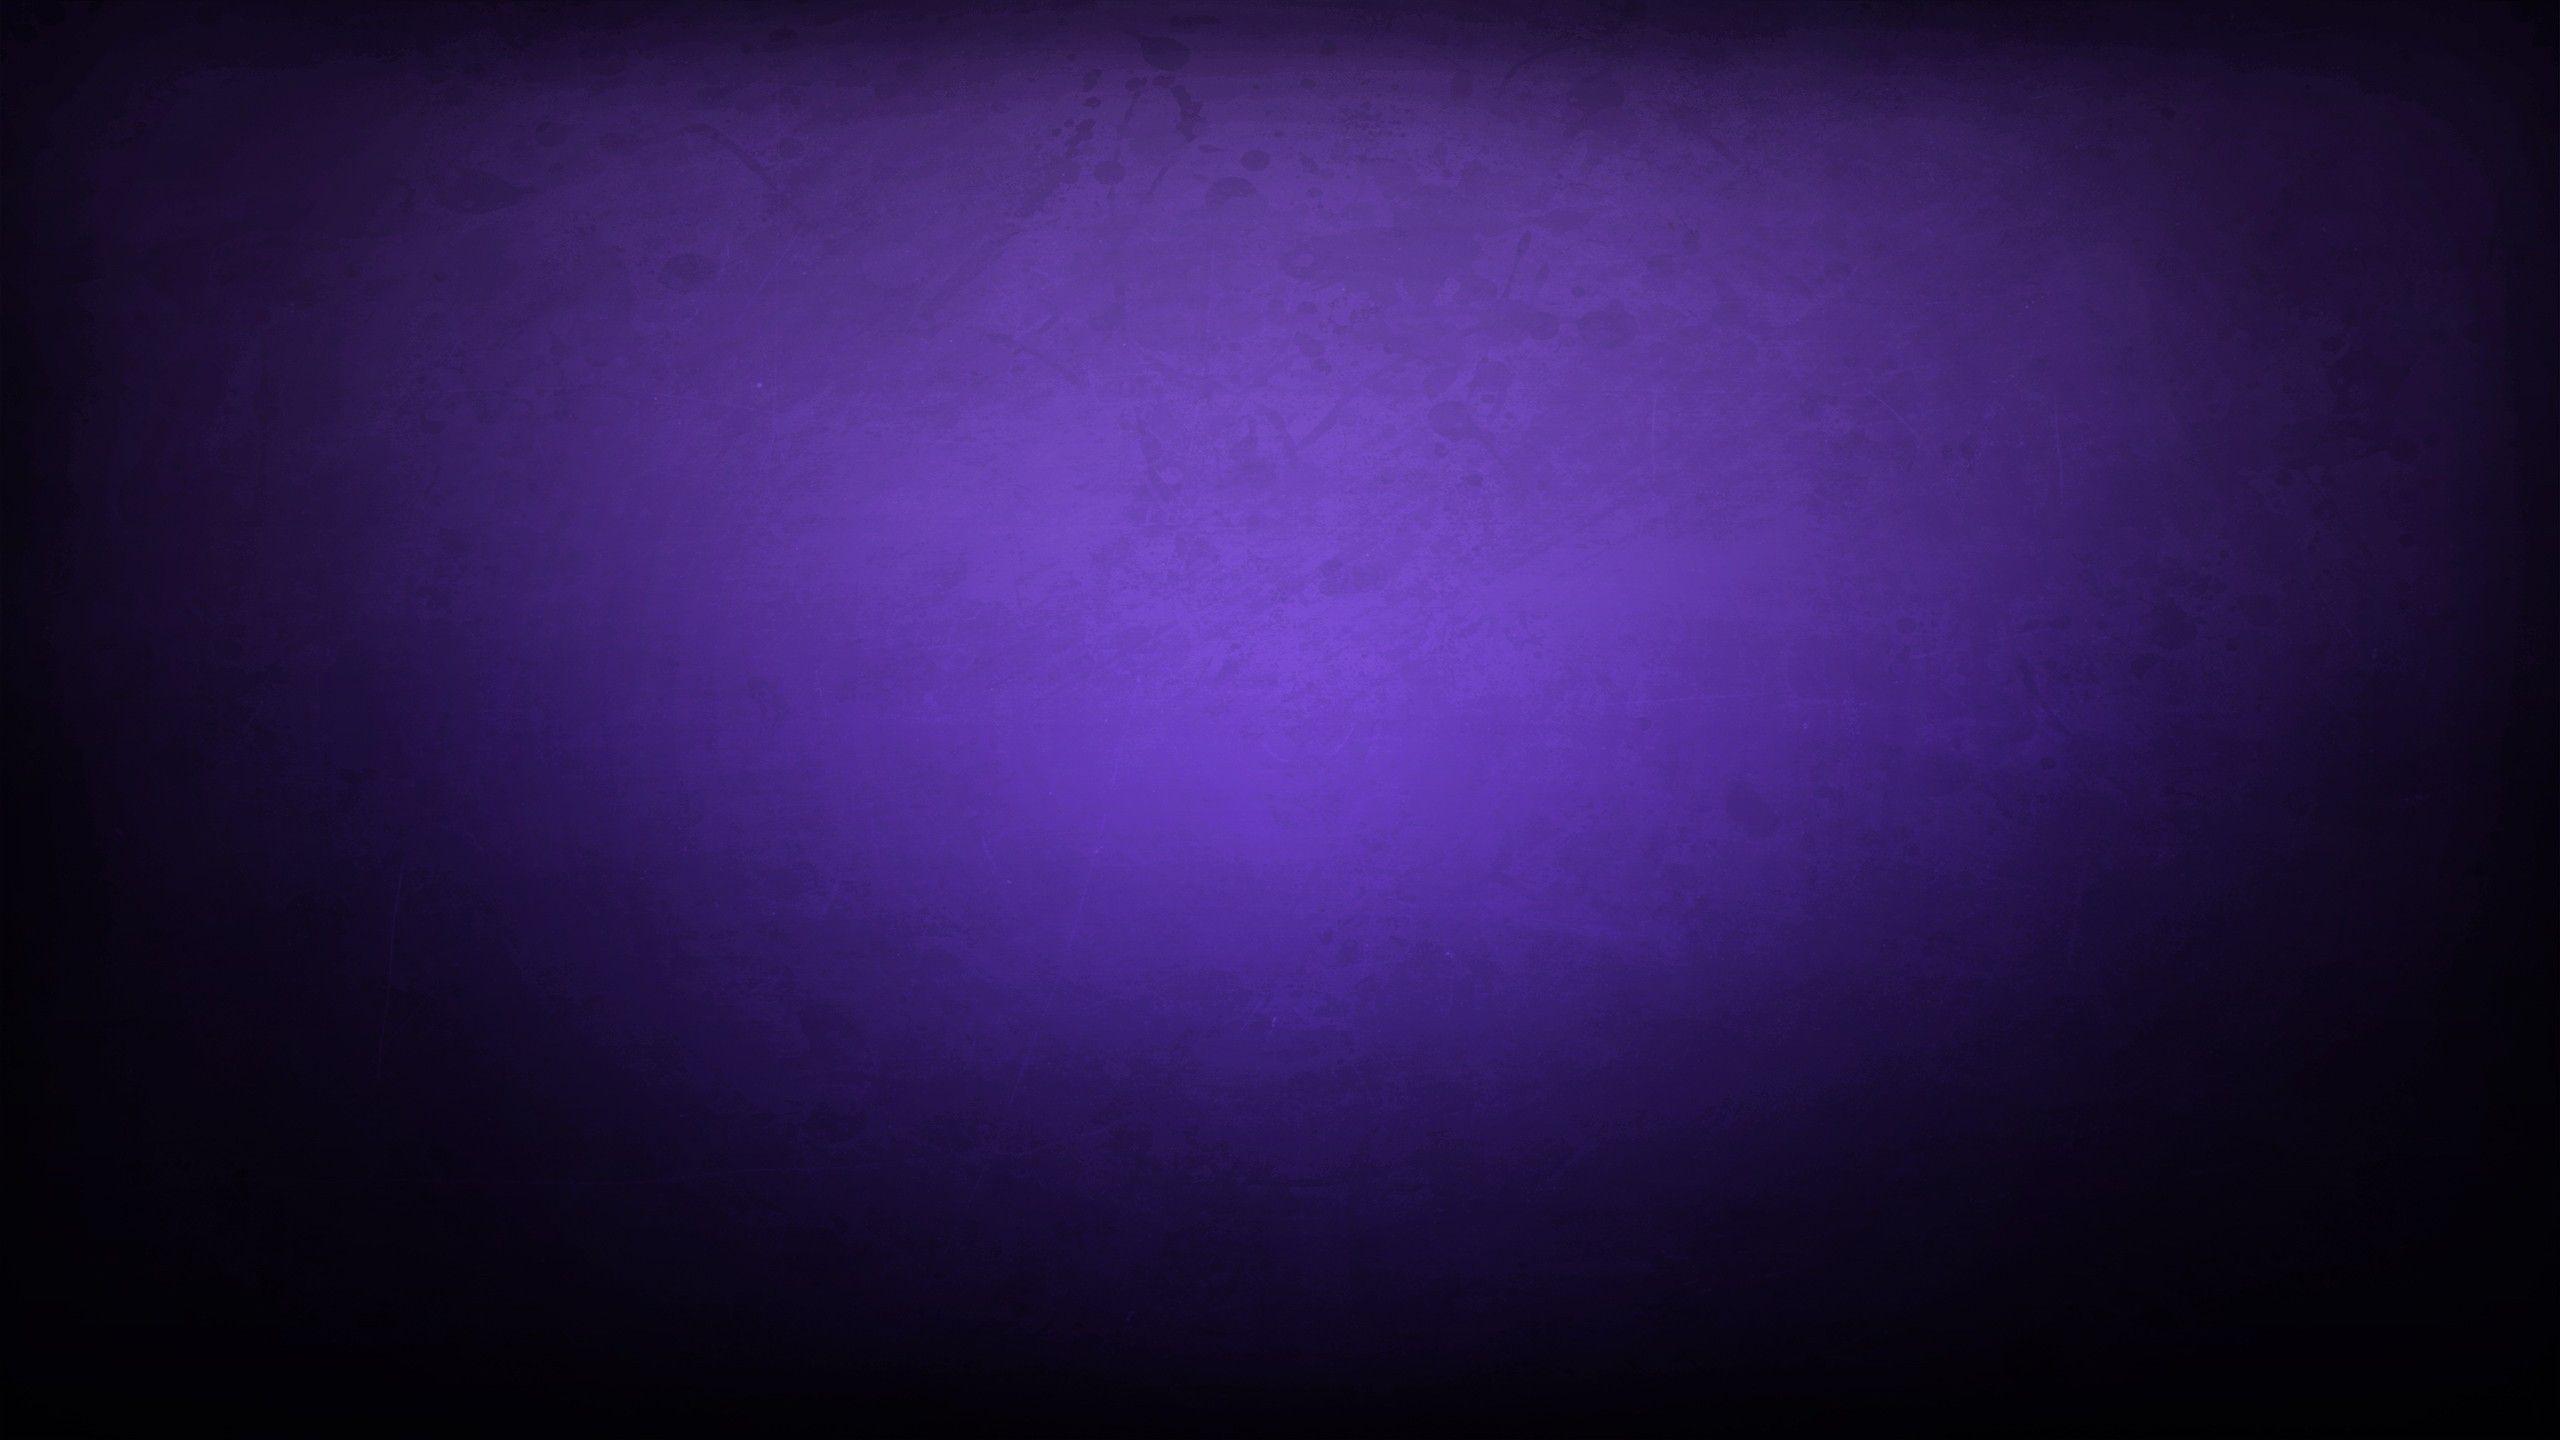  Purple  Backgrounds  Wallpaper  Cave